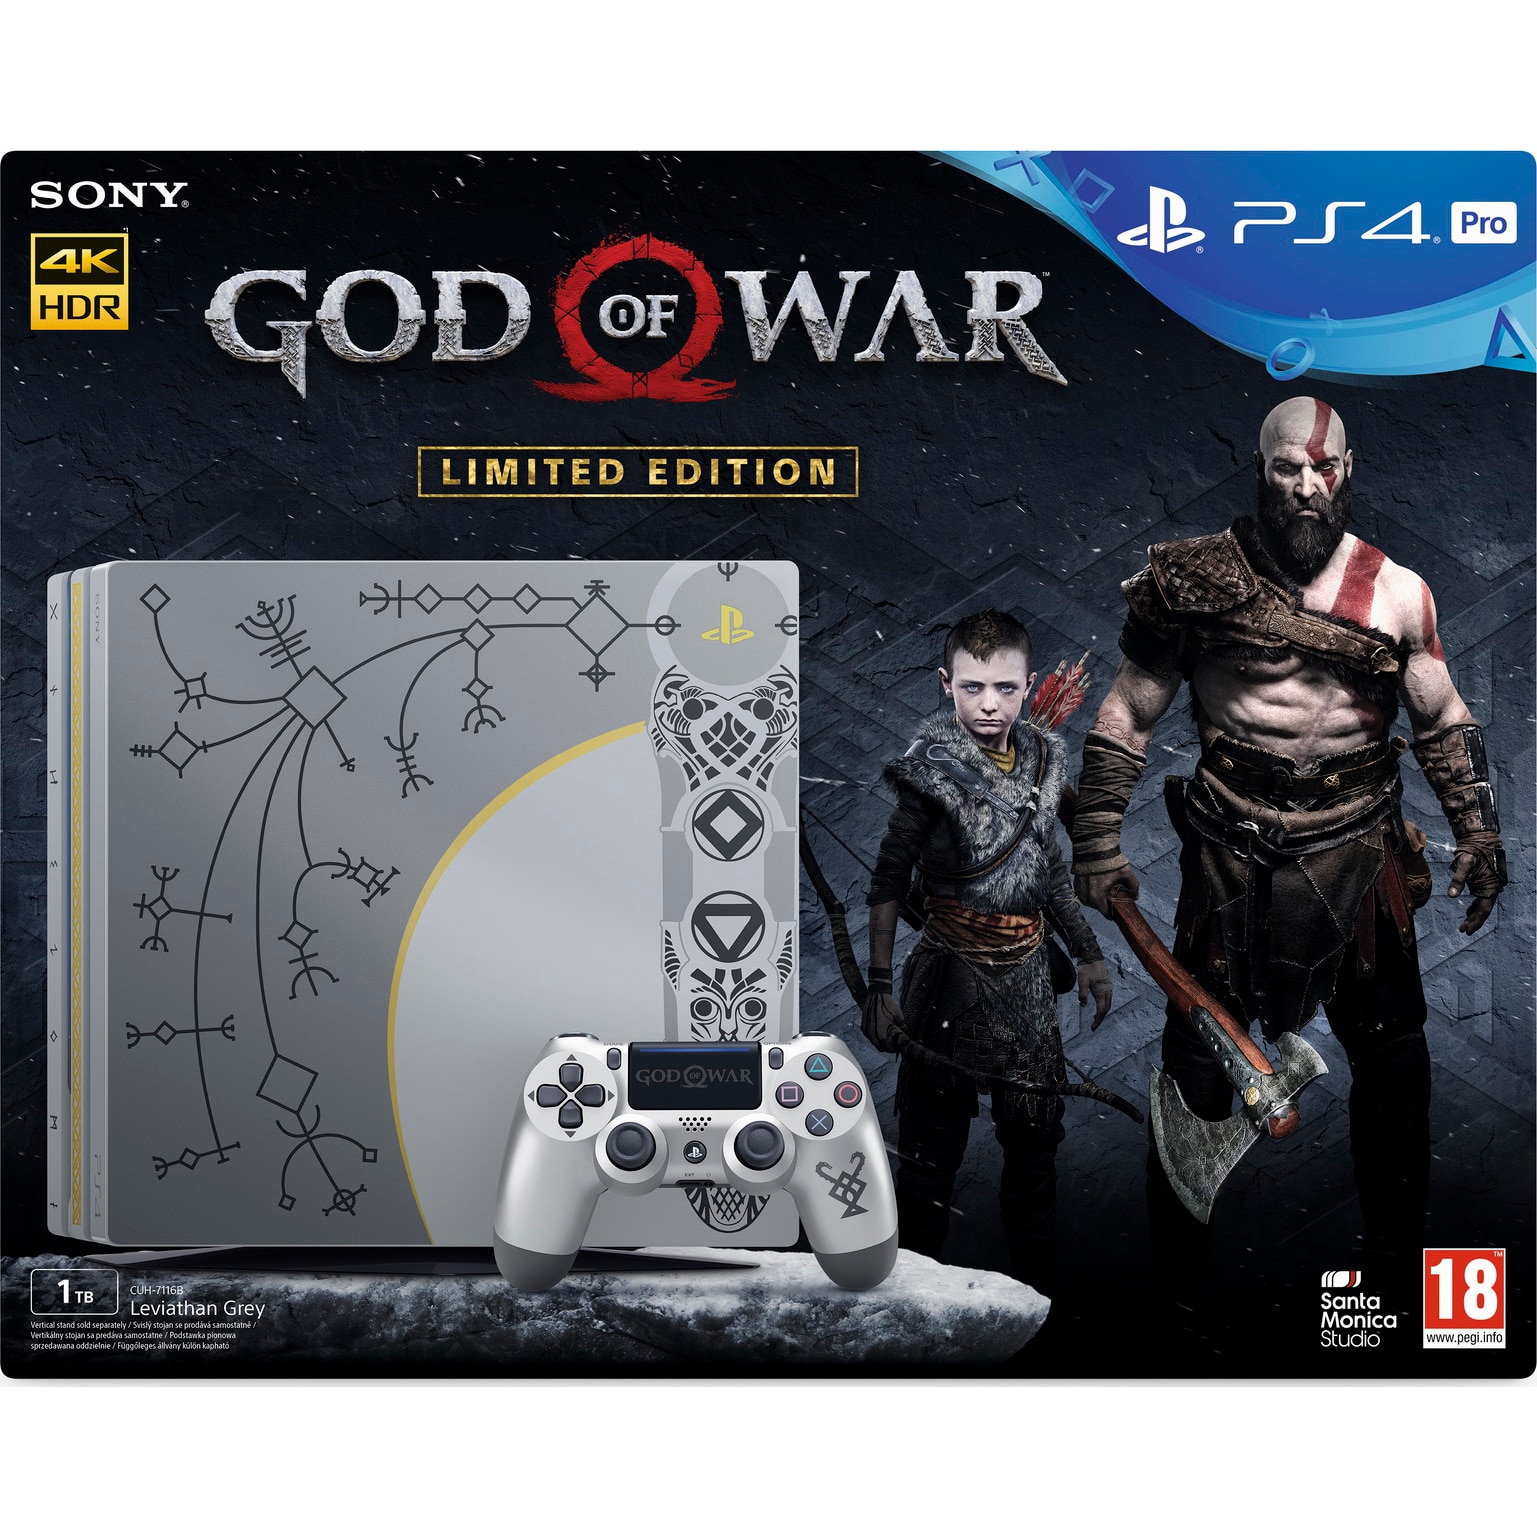 Bother Wonder spark Consola SONY PlayStation 4 PRO 1TB, God of War Limited Edition + joc God of  War 4 - eMAG.ro